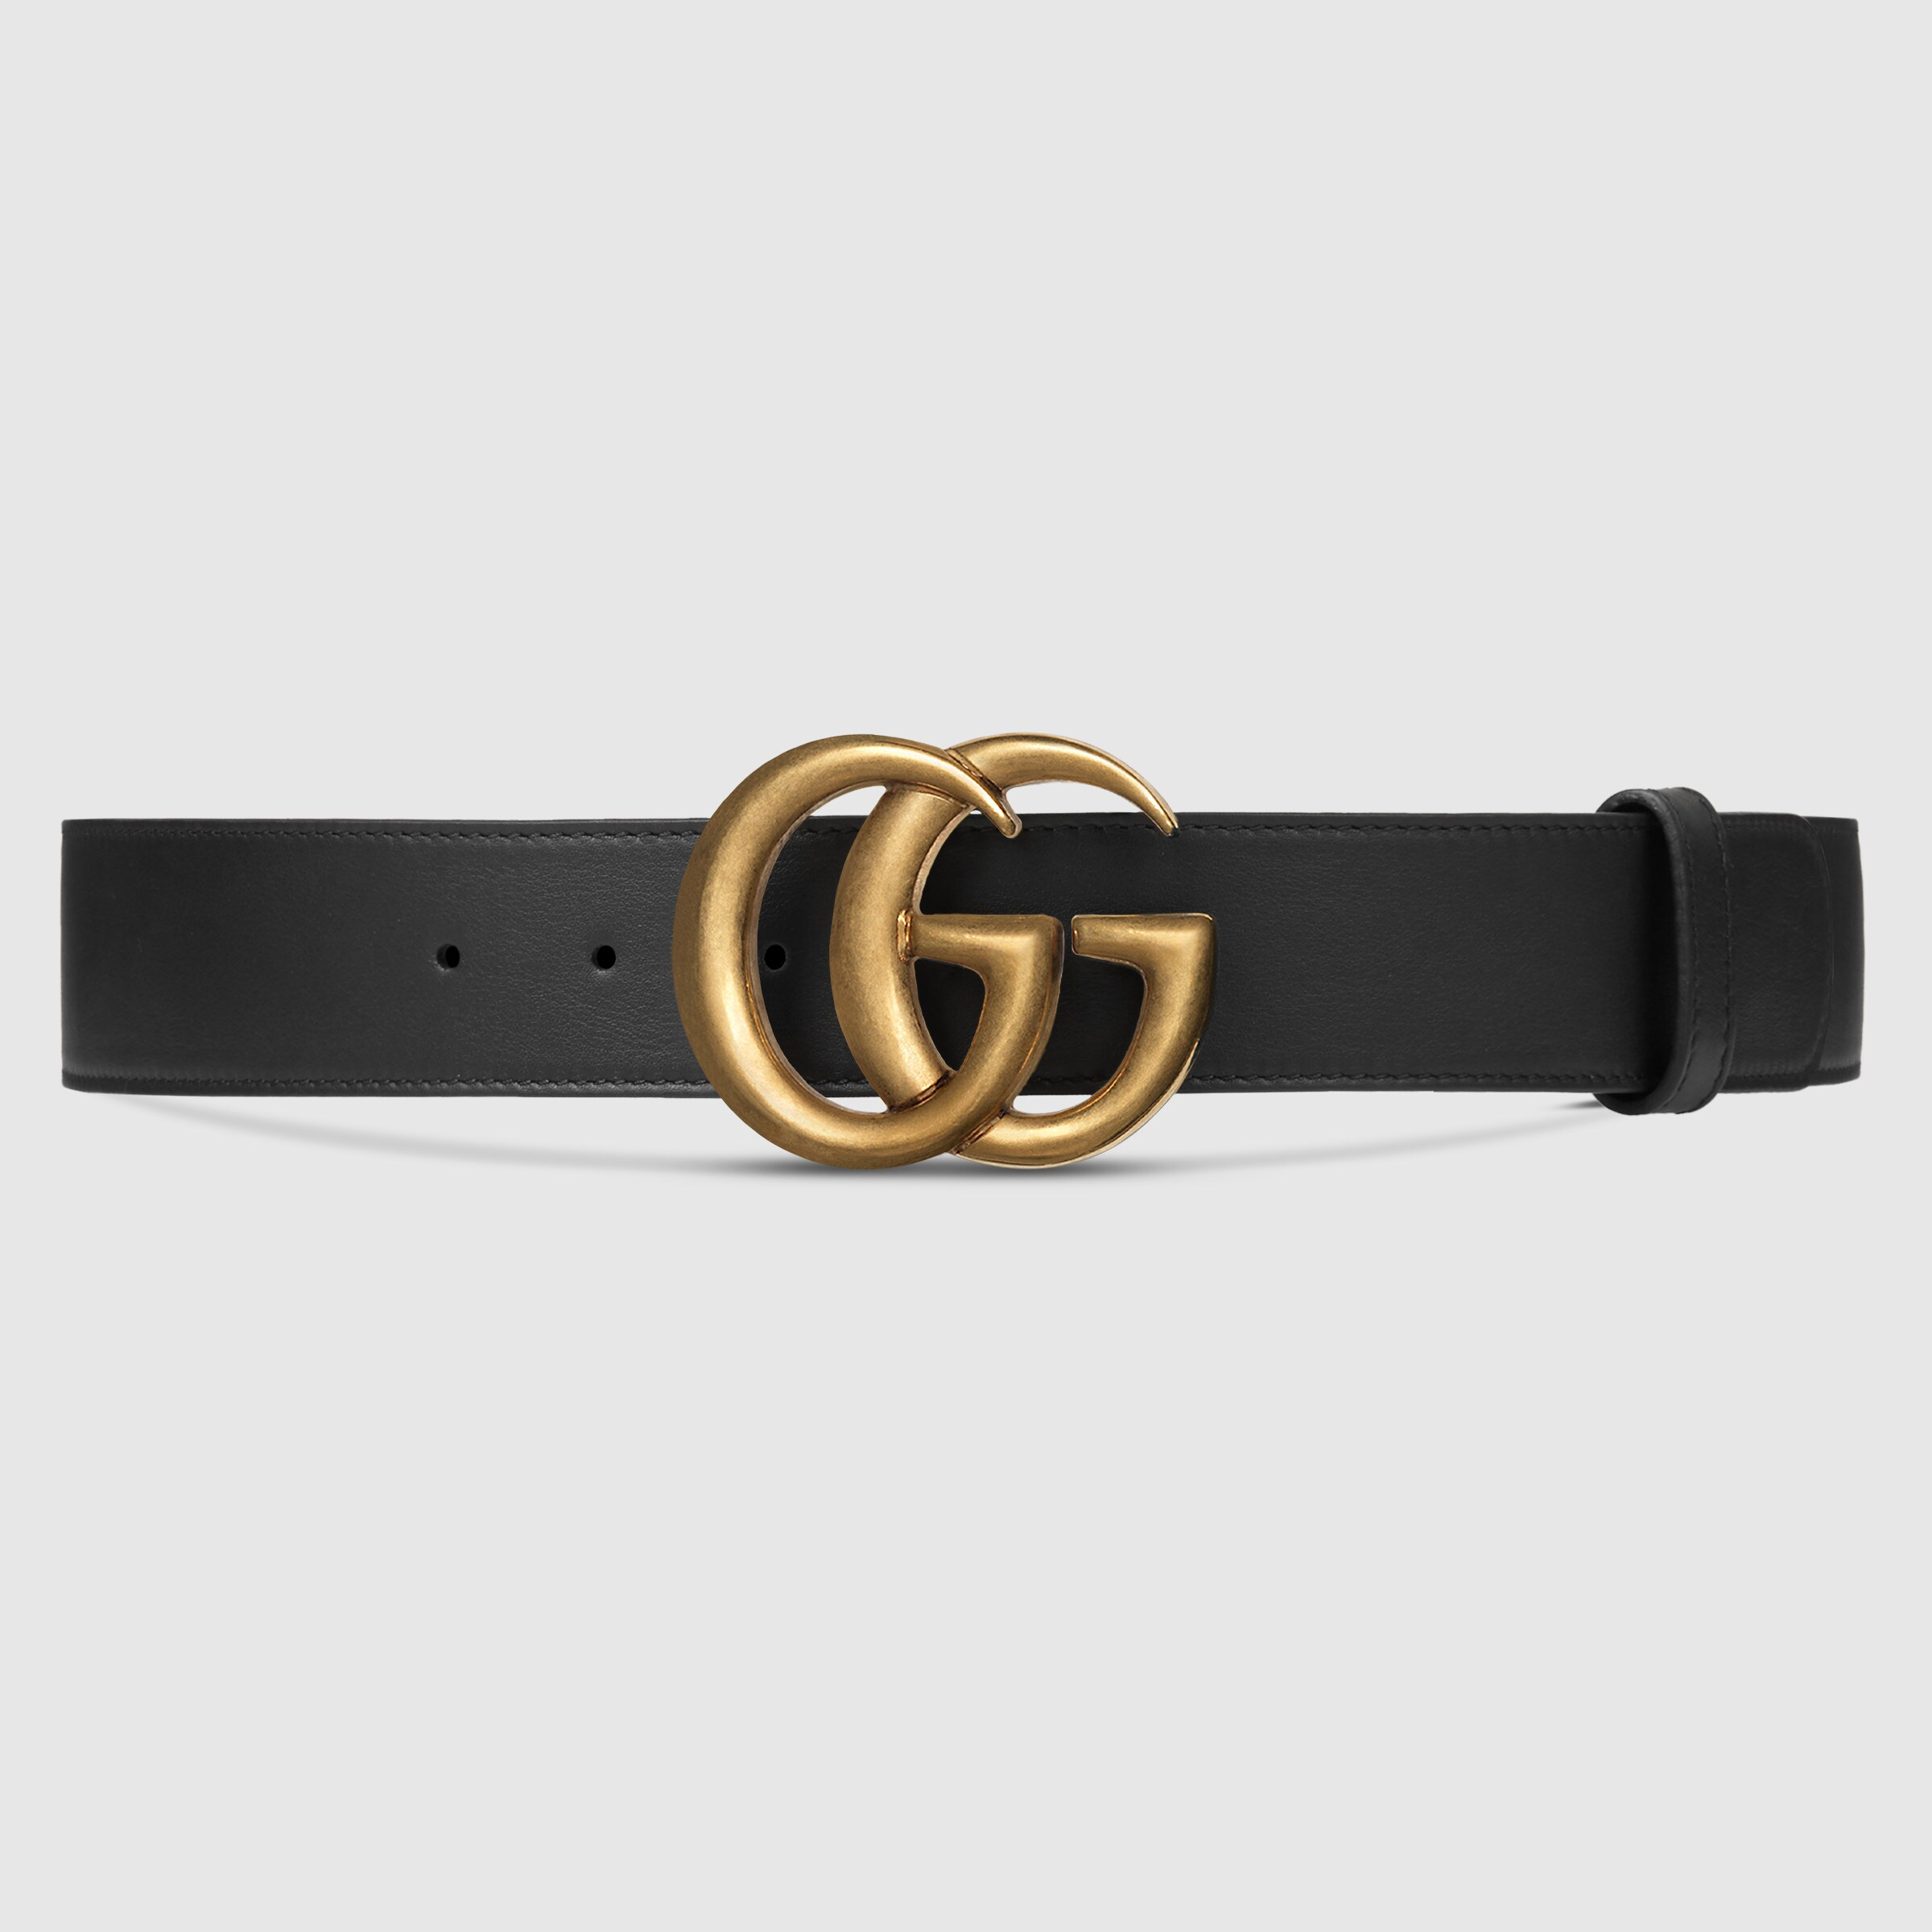 Gucci GG Marmont Belt Black (75 cm)